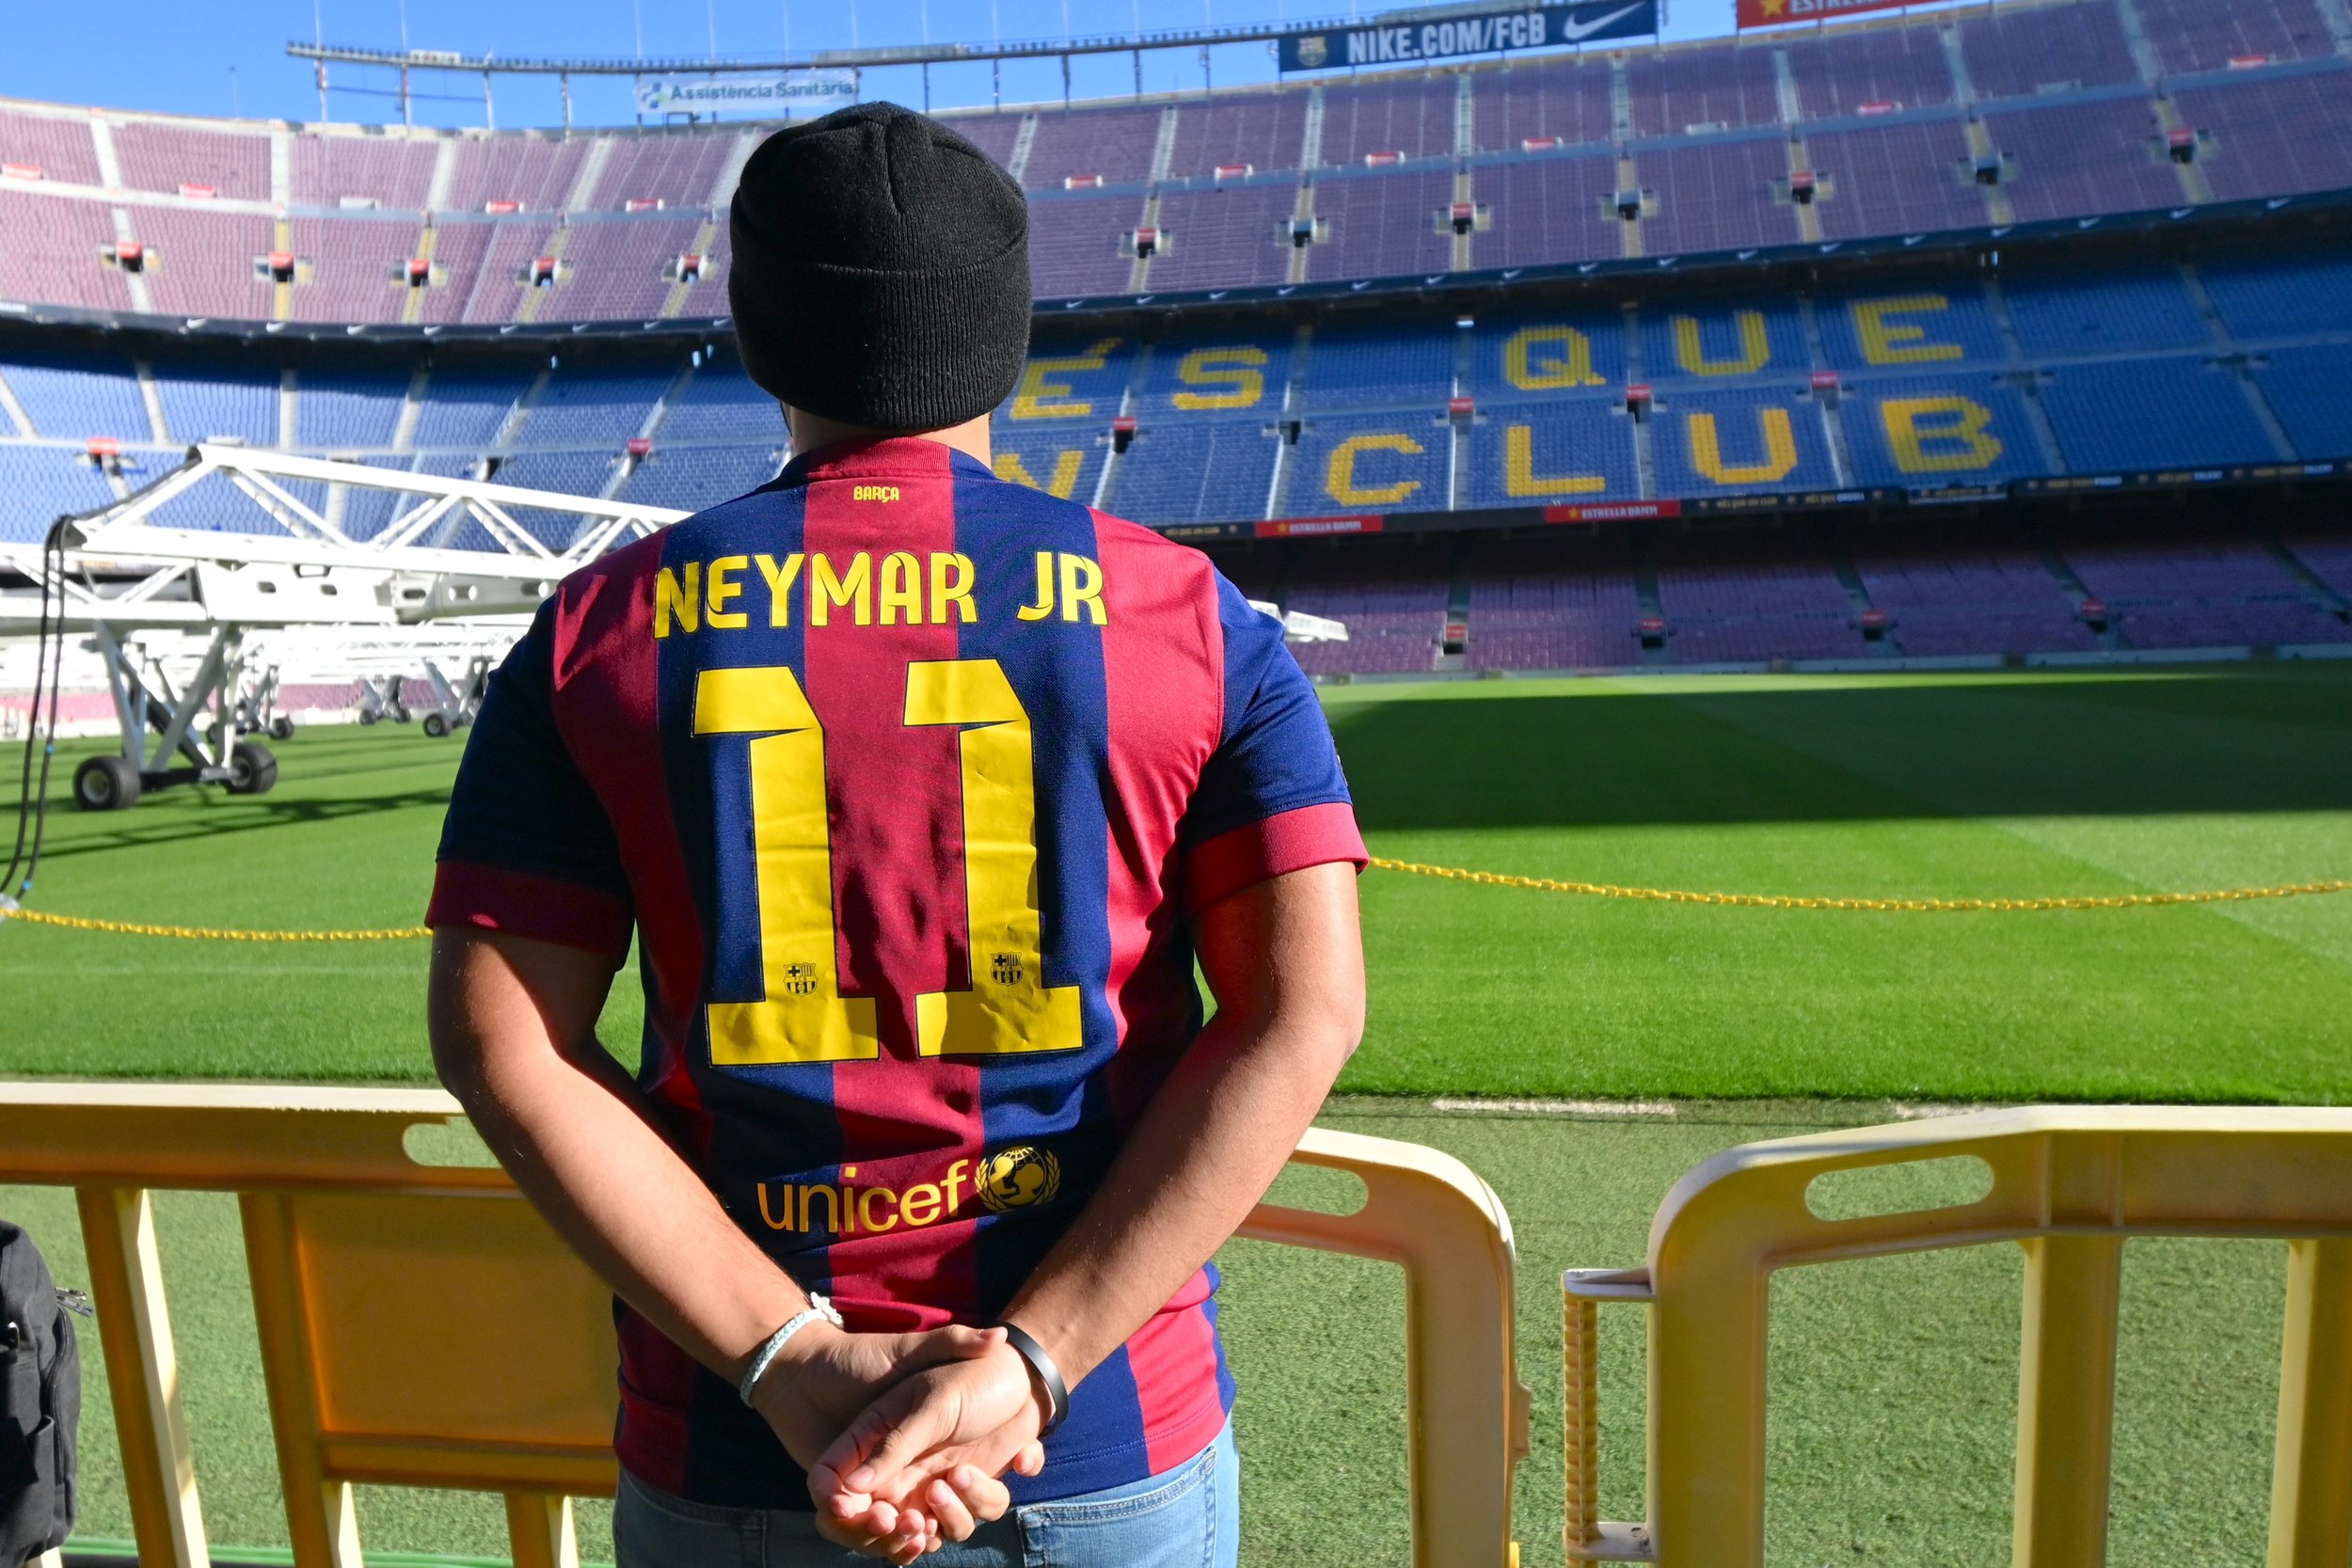 Camp Nou: Barcelona, Spain